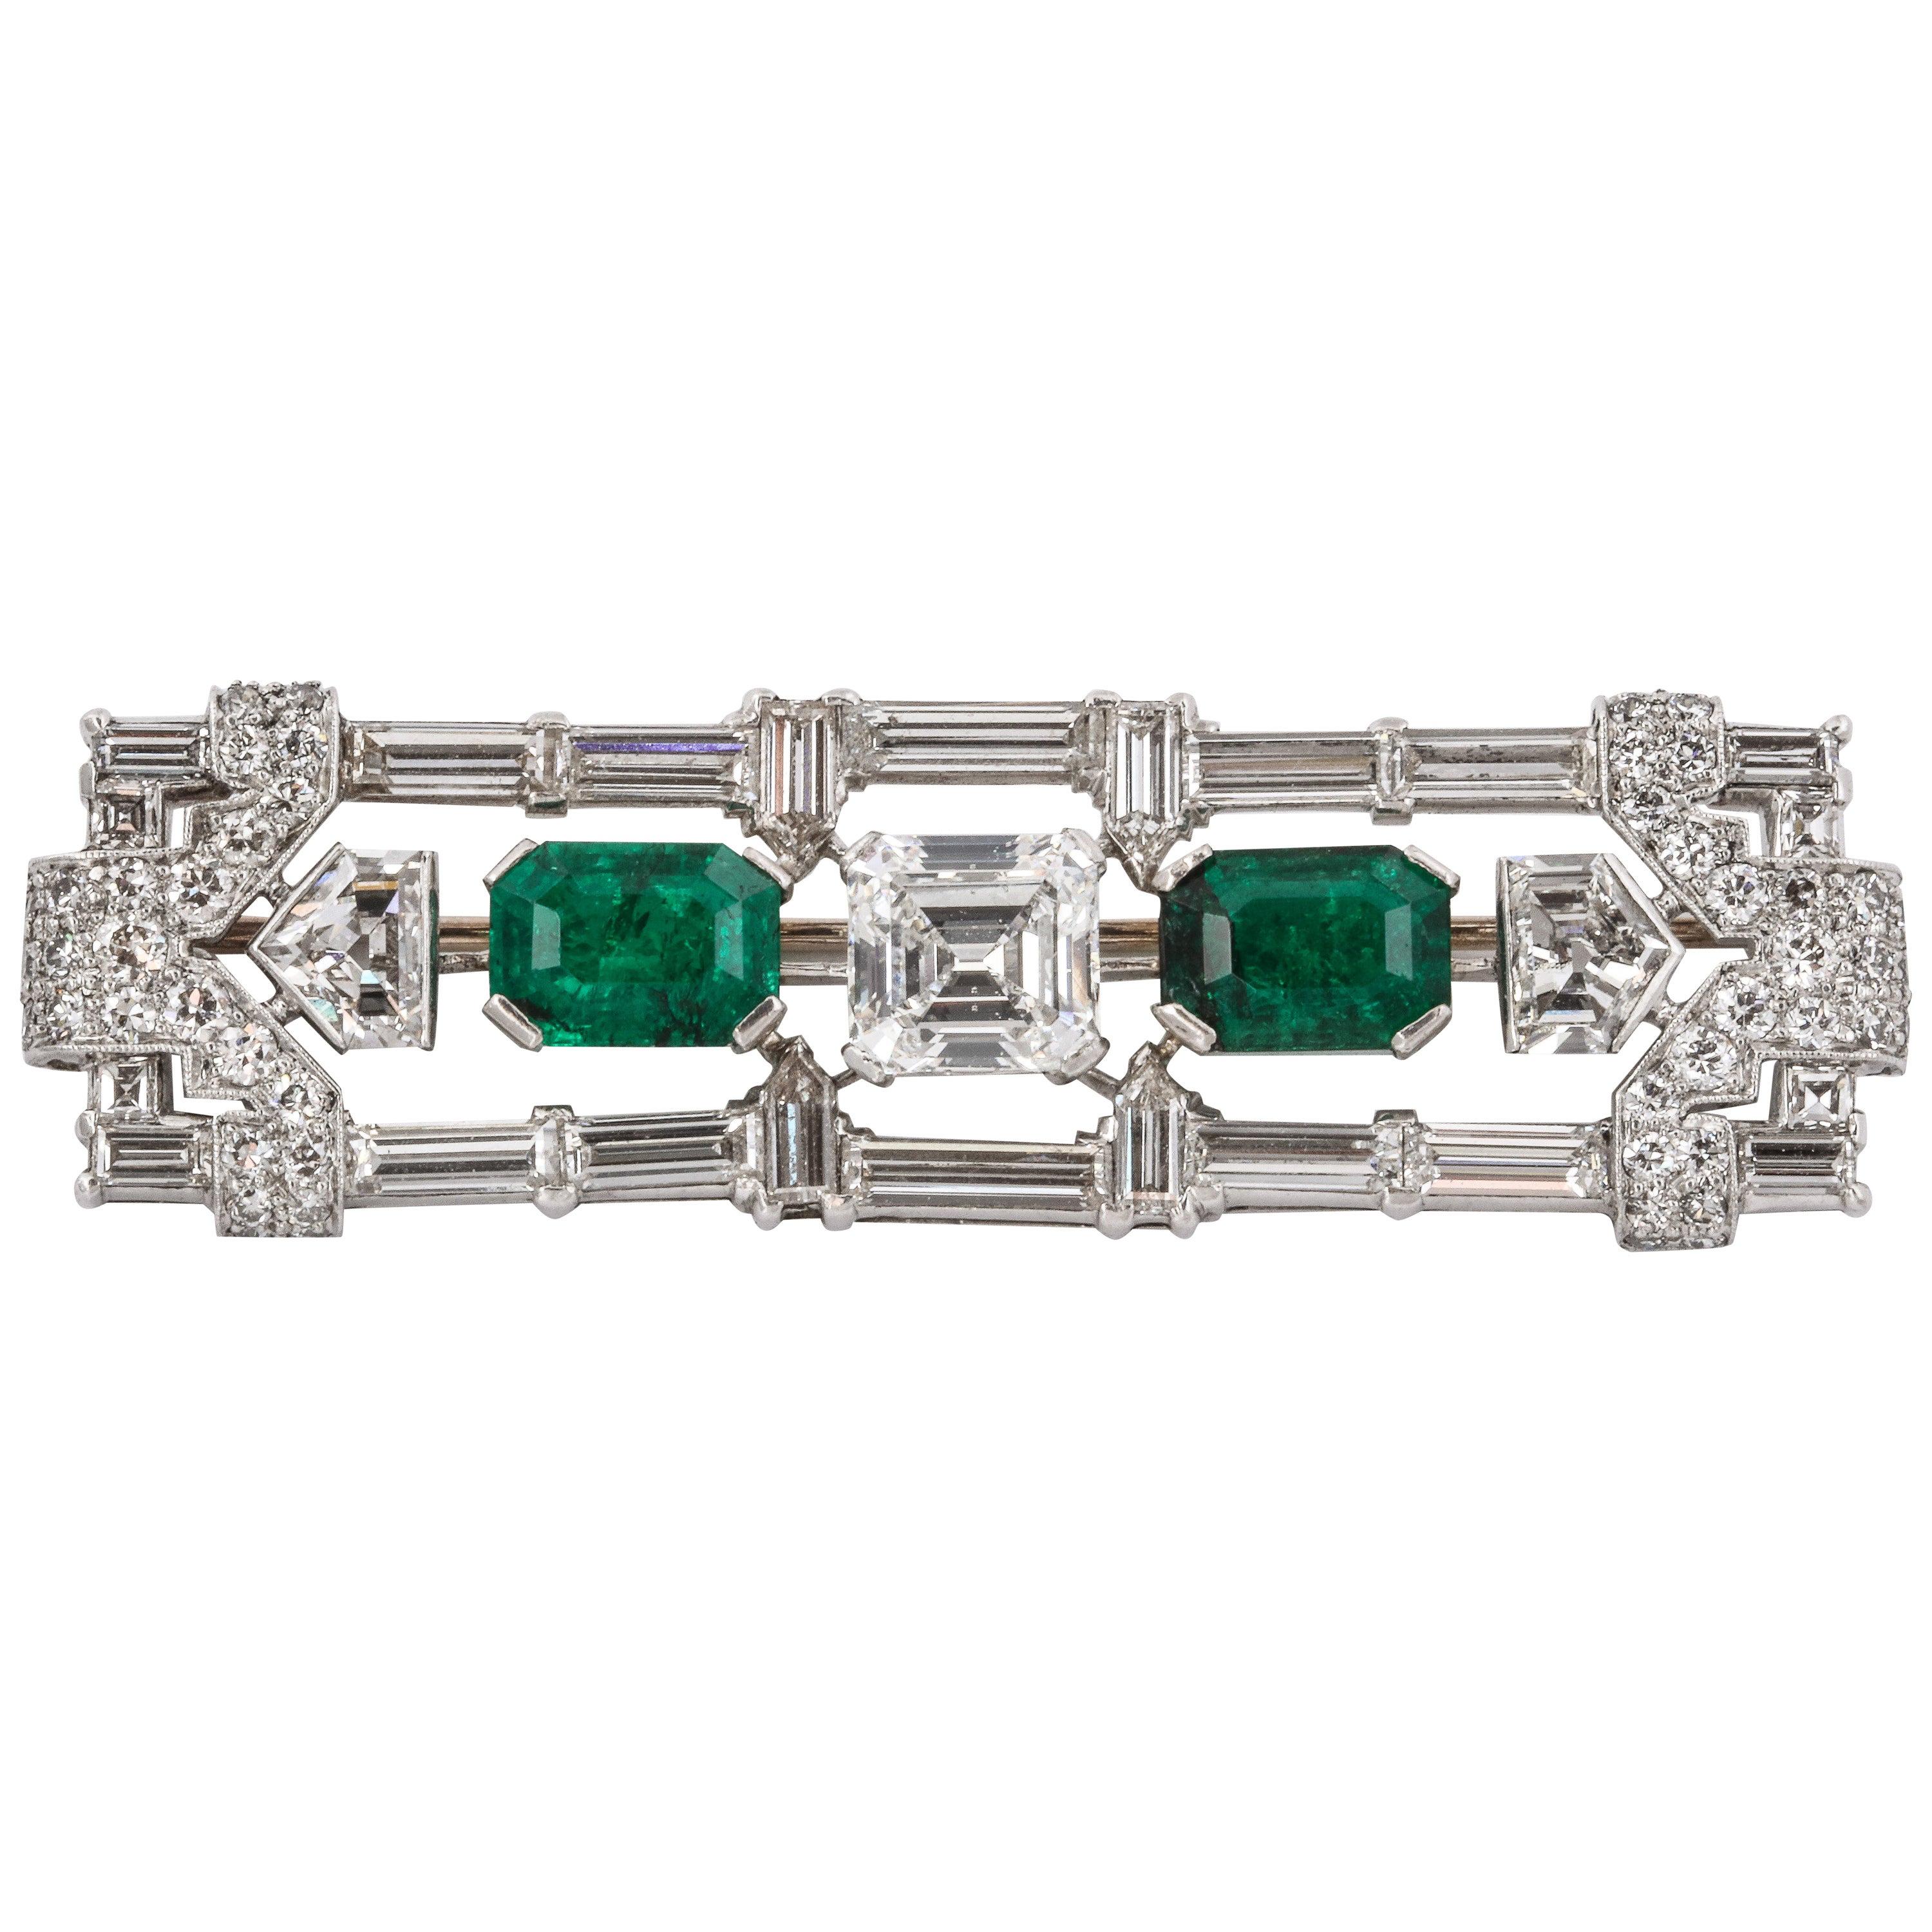 GIA Certified Art Deco Diamond and Emerald Brooch